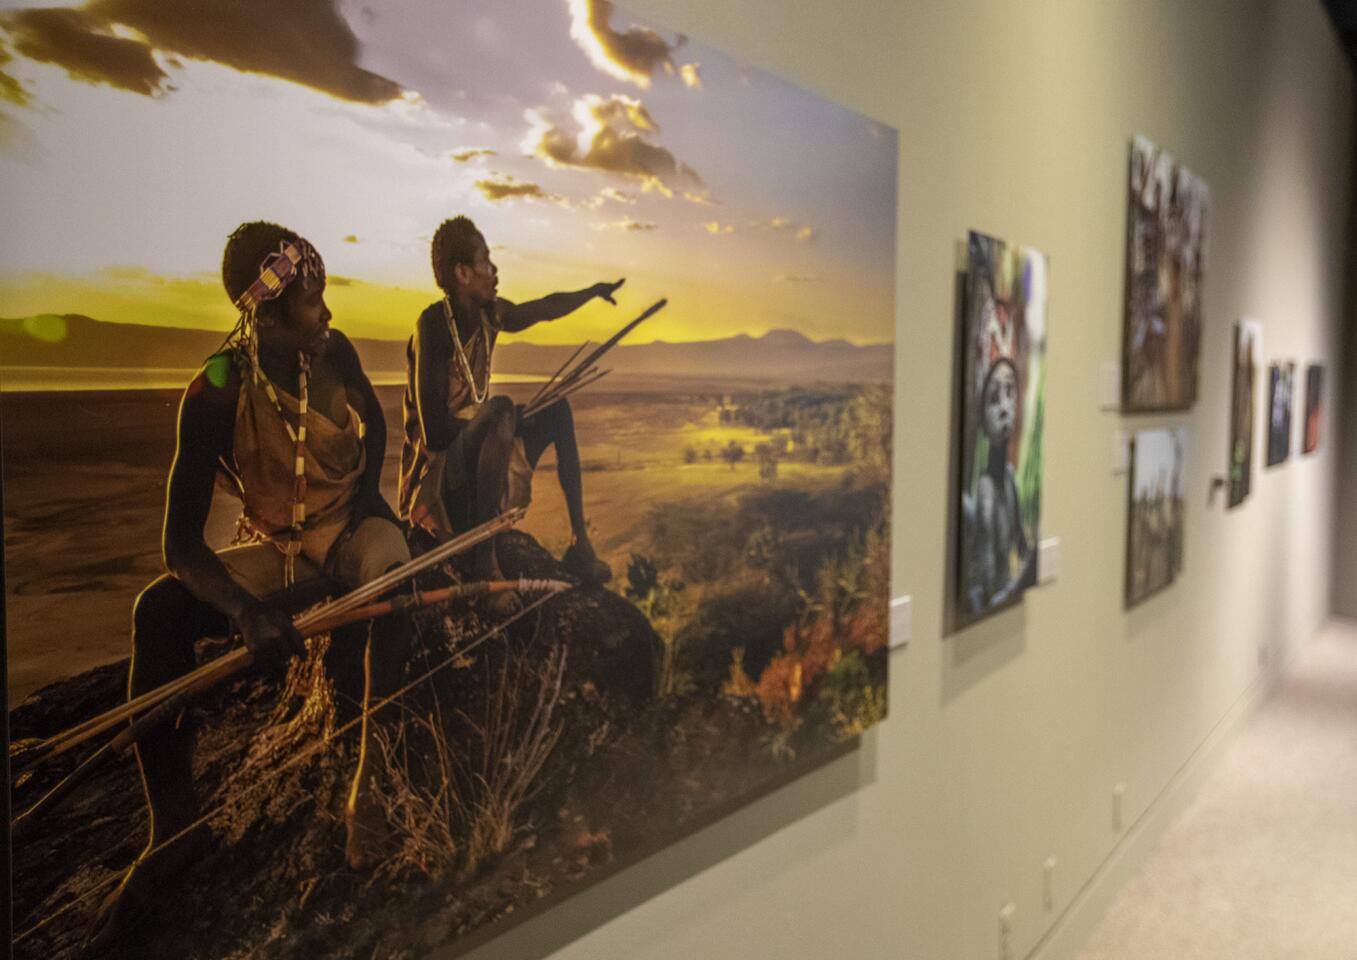 Photo Gallery: "African Twilight: Vanishing Rituals & Ceremonies" exhibit at the Bowers Museum